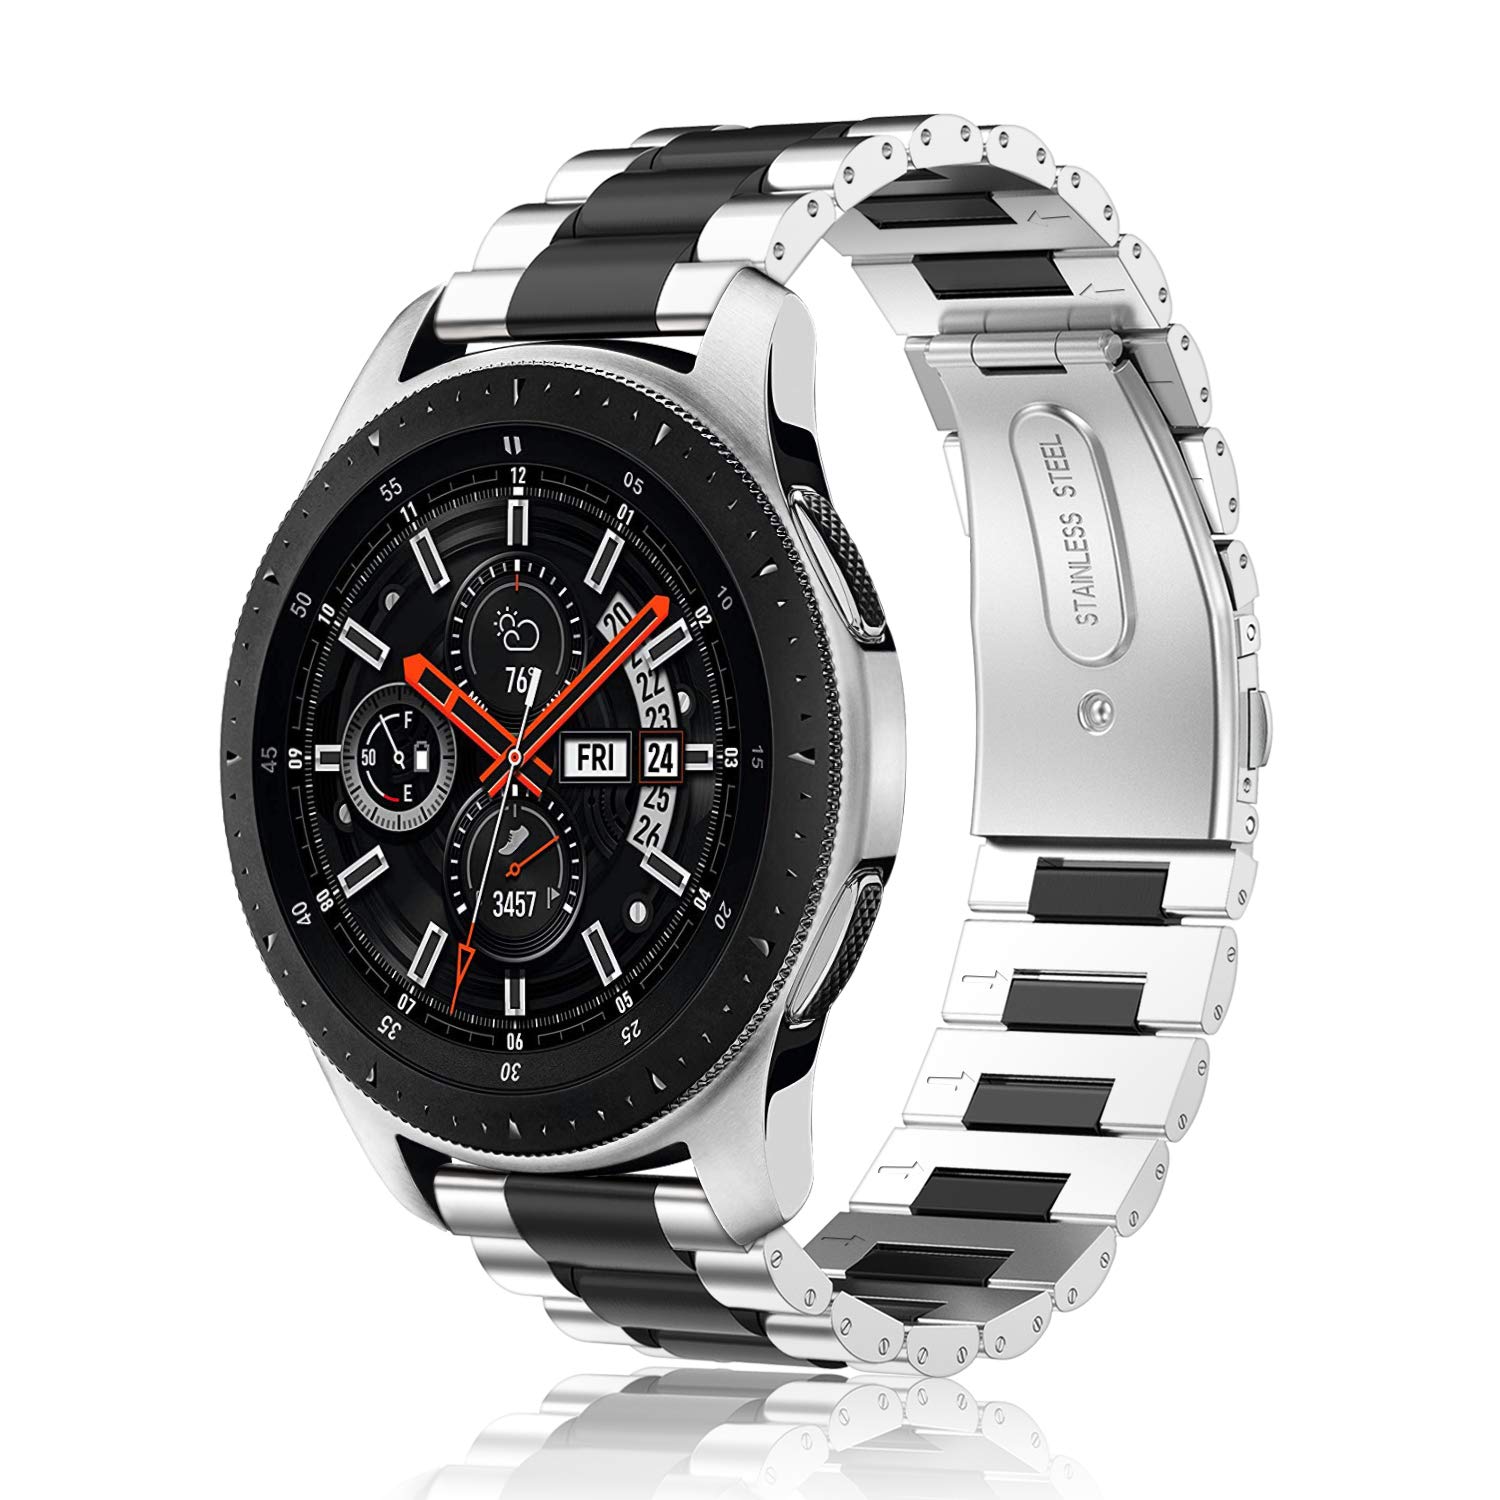 for Samsung Galaxy Watch 3 45mm / Gear S3 / Galaxy Watch 46mm oh 22mm voh XeXoh xg pxg Ht Gear S3 Frontier/S3 Classic/Galaxy Watch 46mm / Watch 3 45mm ΉifUCACubN/Vo[j